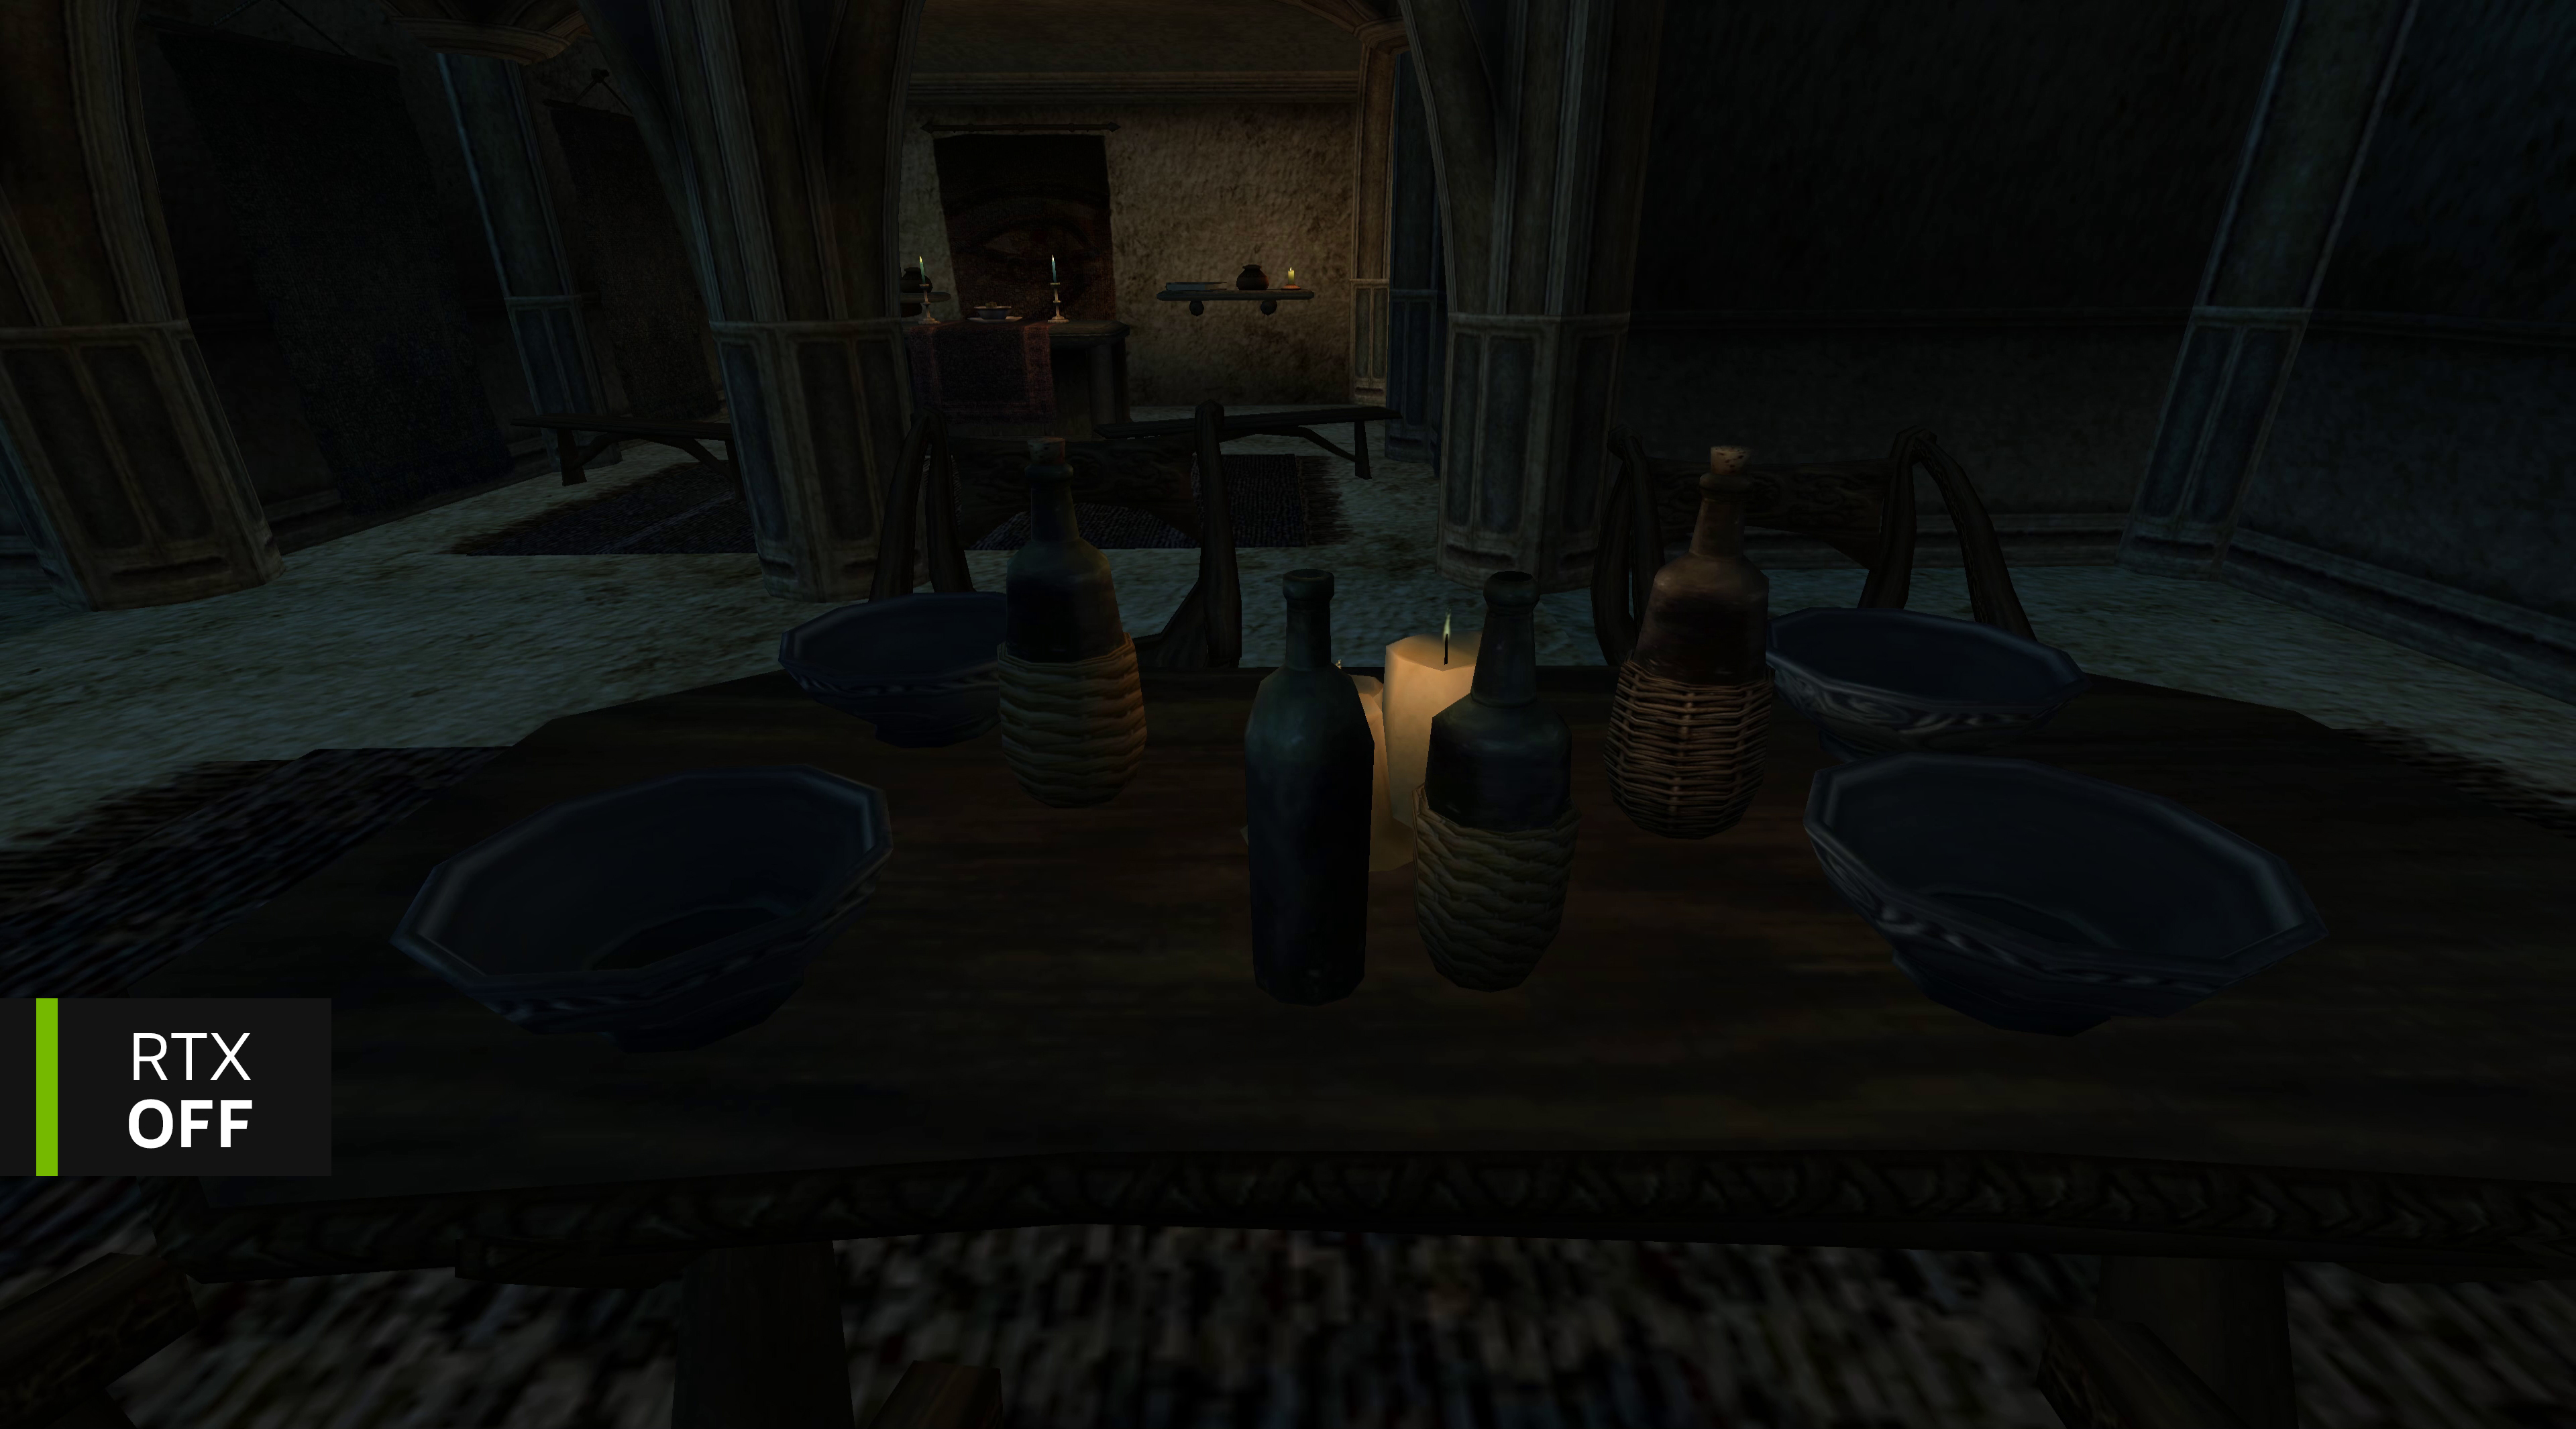 Dark Souls 2 Lighting Overhaul Mod in the Works By Lighting Artist;  Impressive Screenshots Shown Off